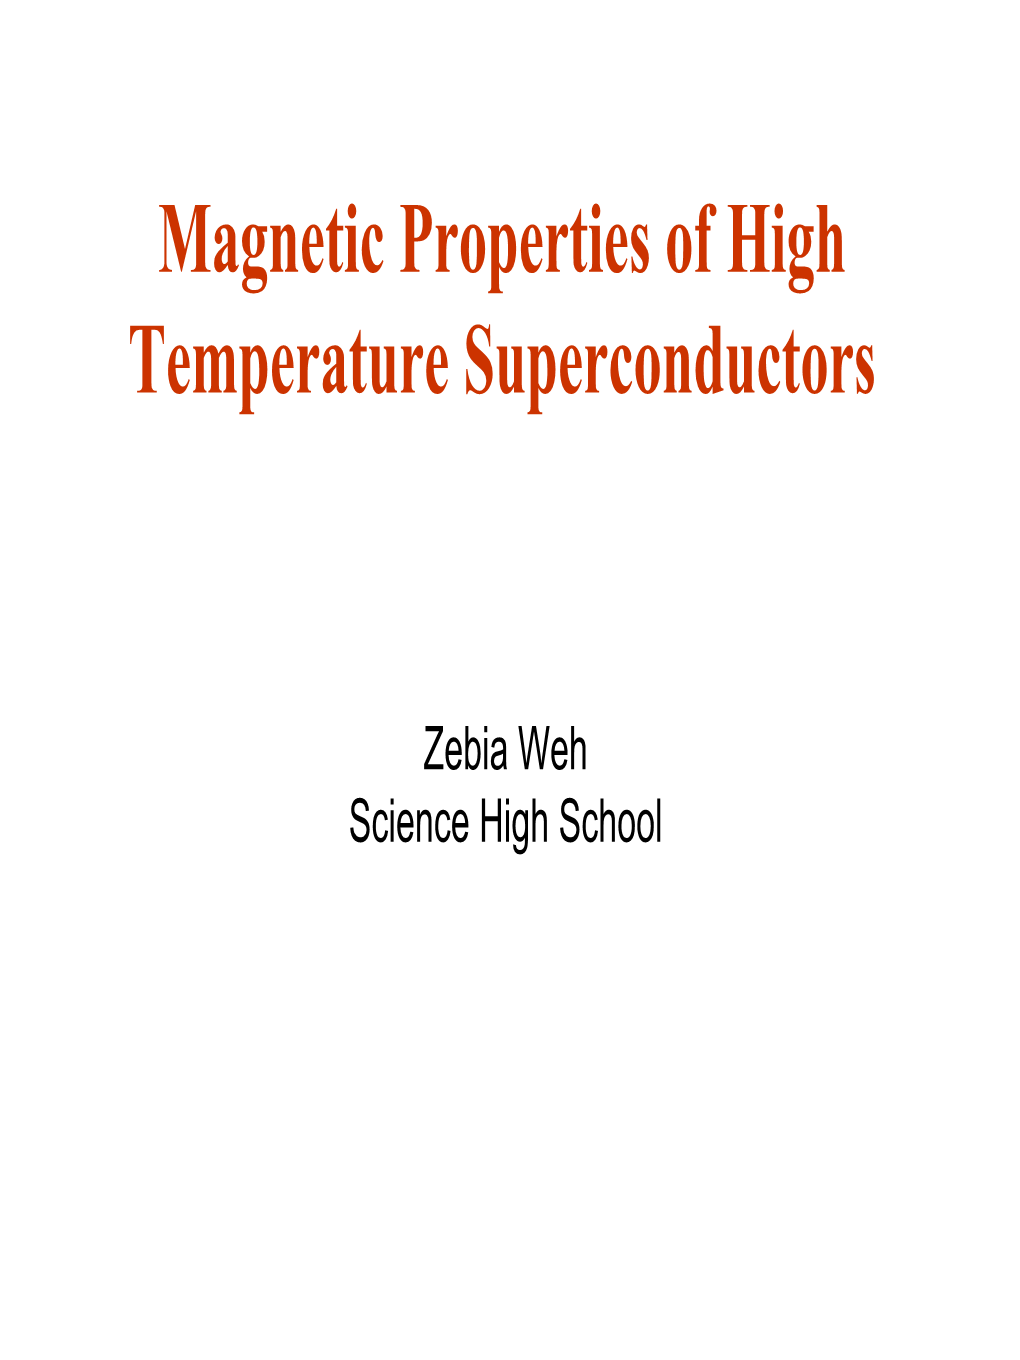 Magnetic Properties of High Temperature Superconductors